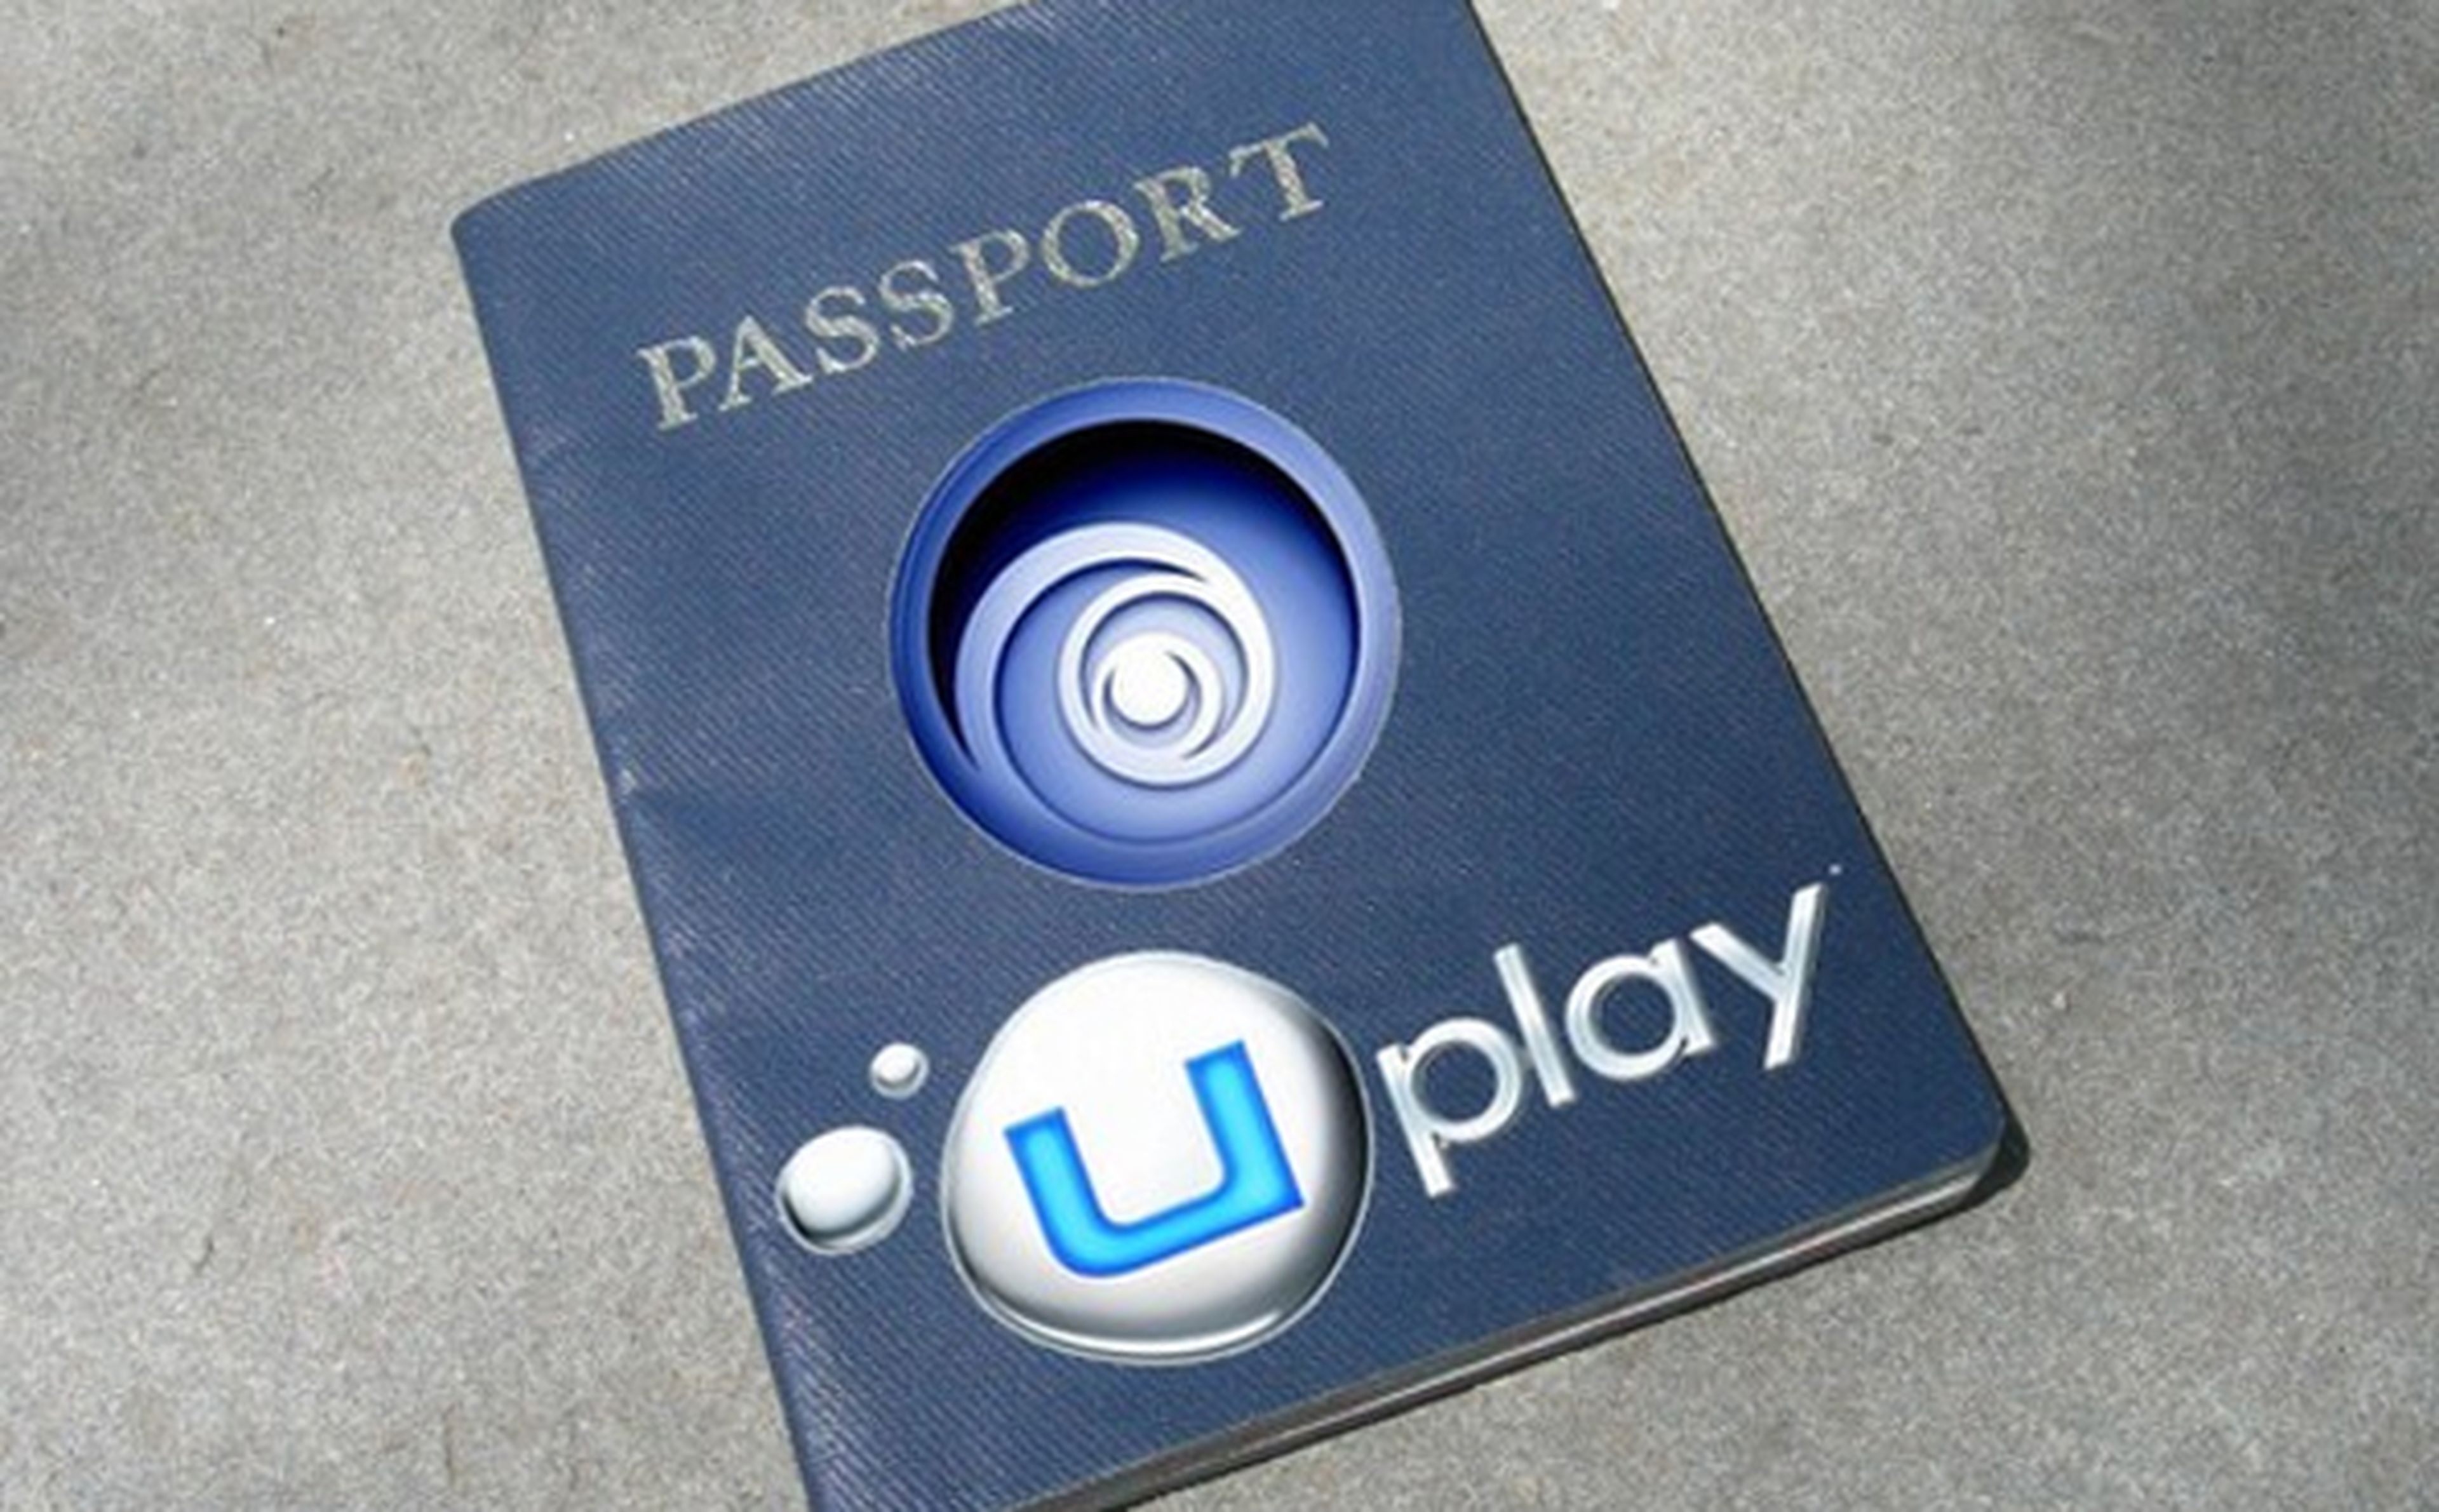 Ubisoft confirma, de nuevo, Uplay Passport